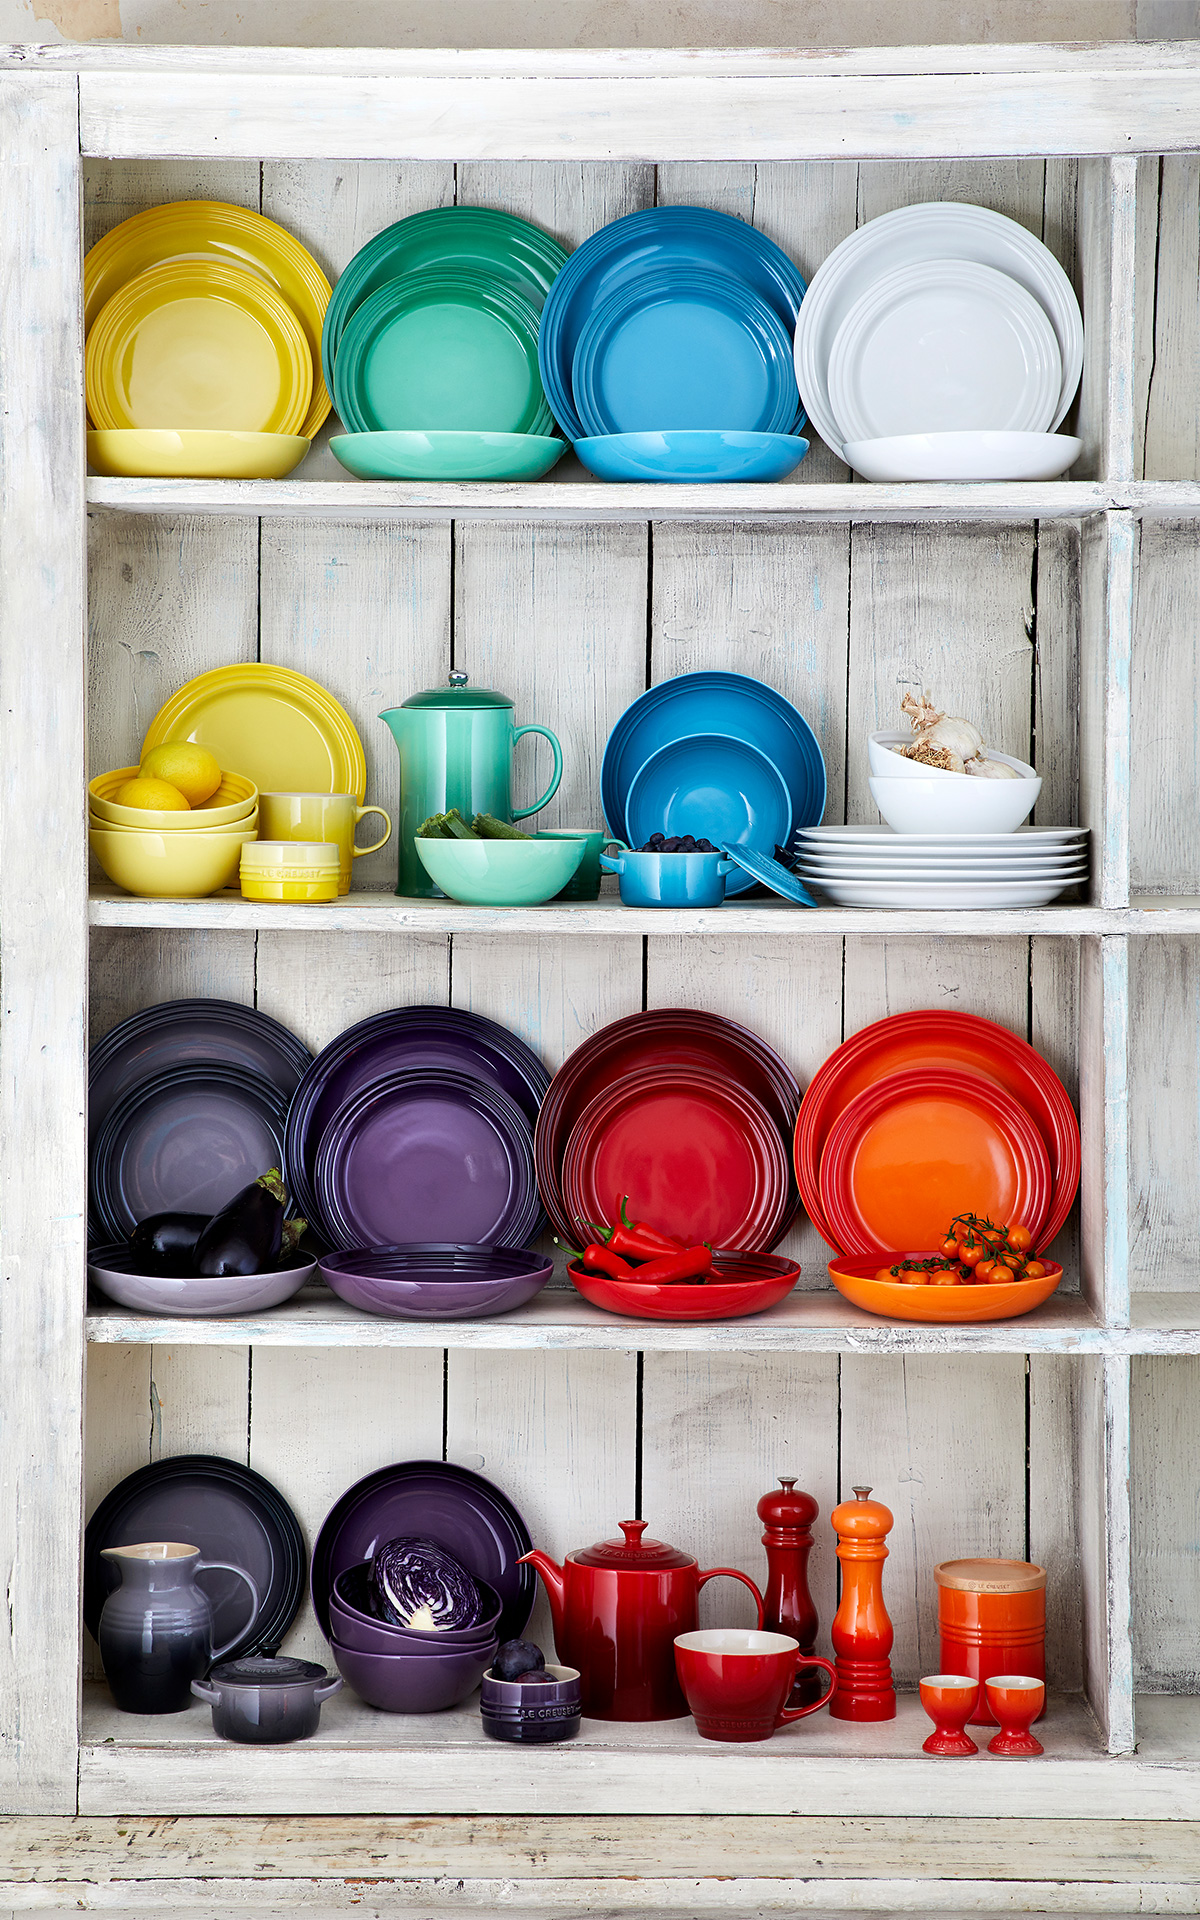 Colourful Le Creuset tableware